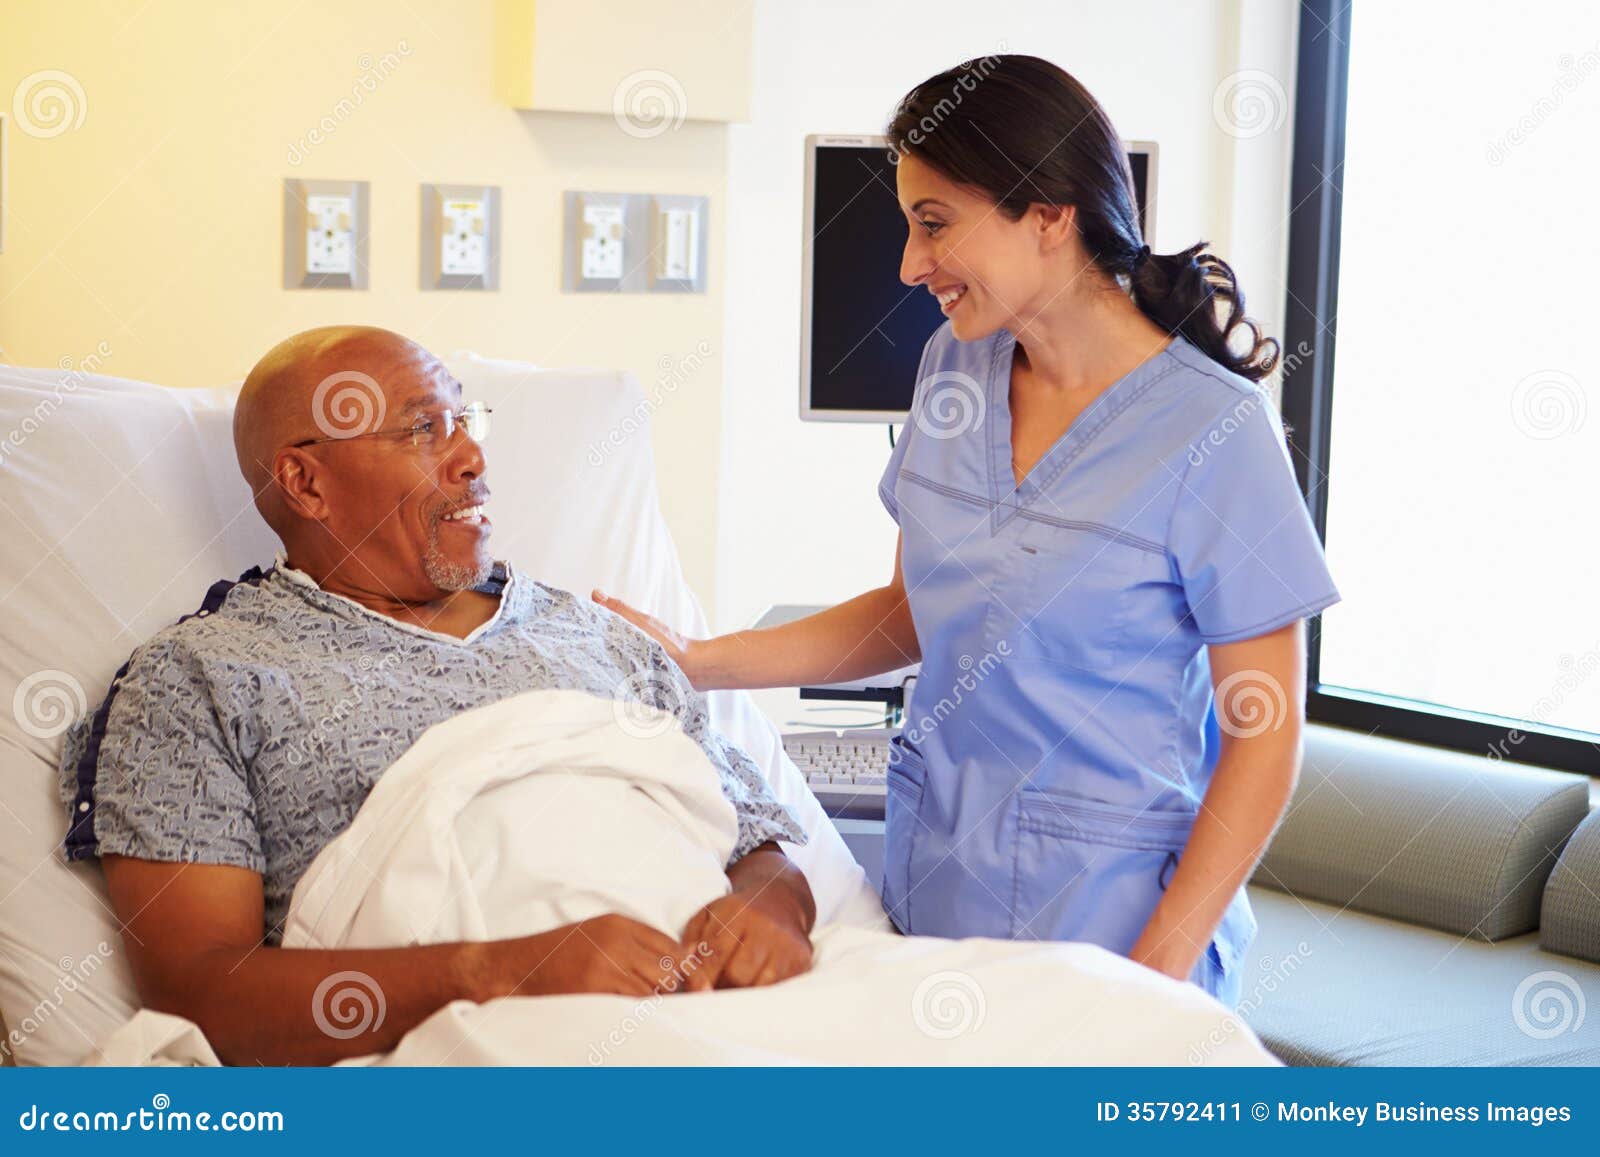 nurse talking to senior male patient in hospital room